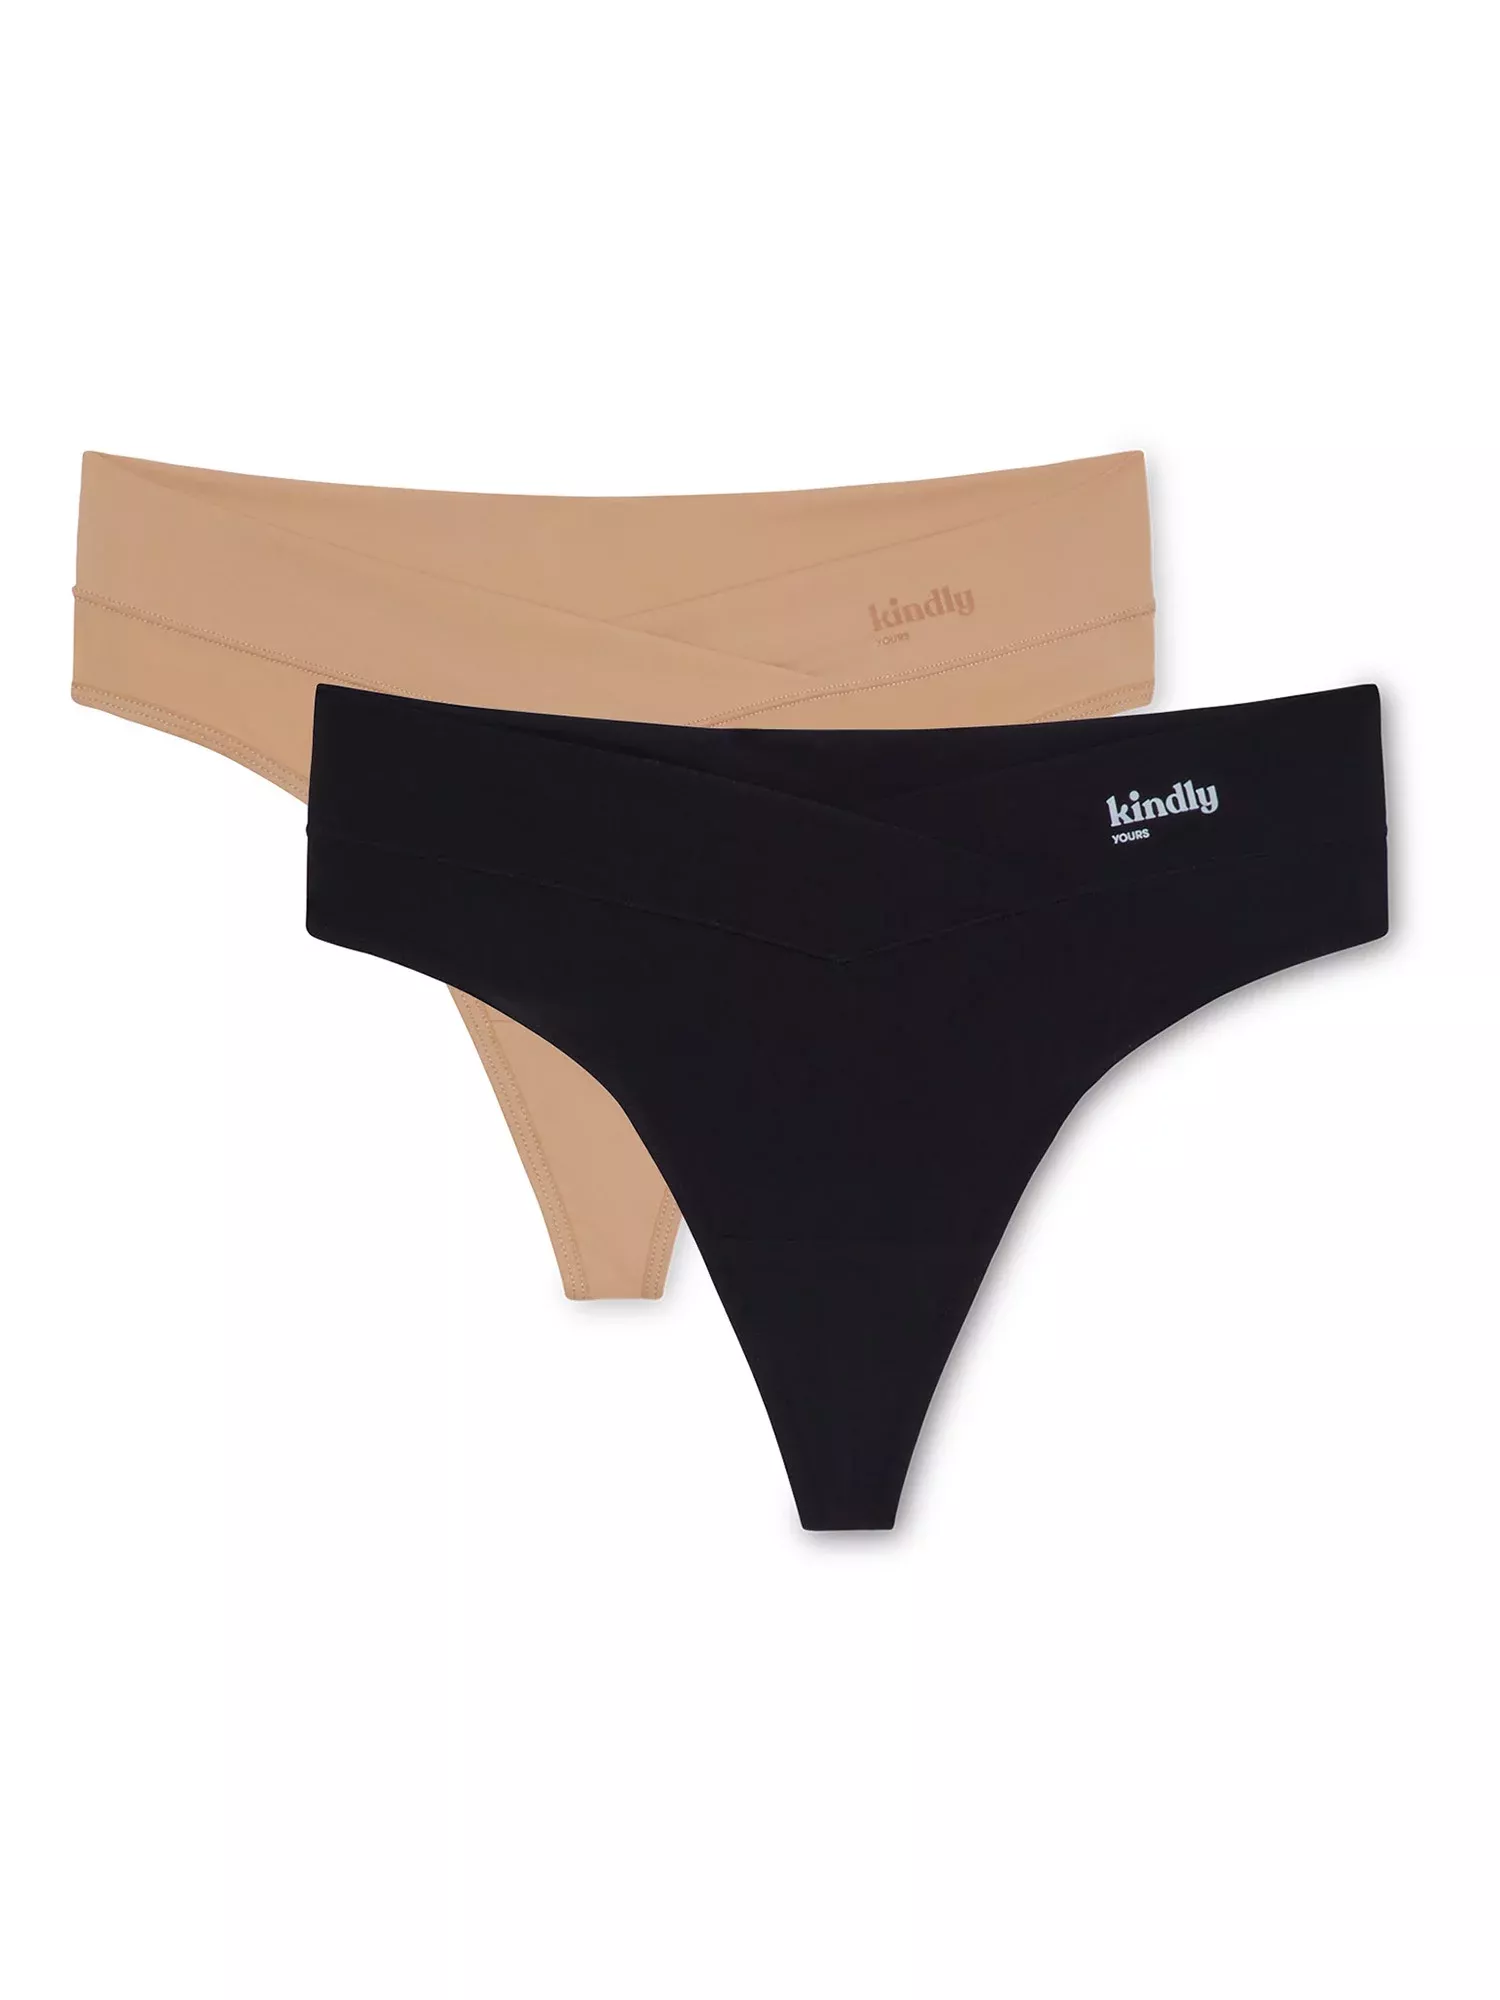 Kindly Yours Women's Comfort Modal Bikini Underwear, 2-Pack 